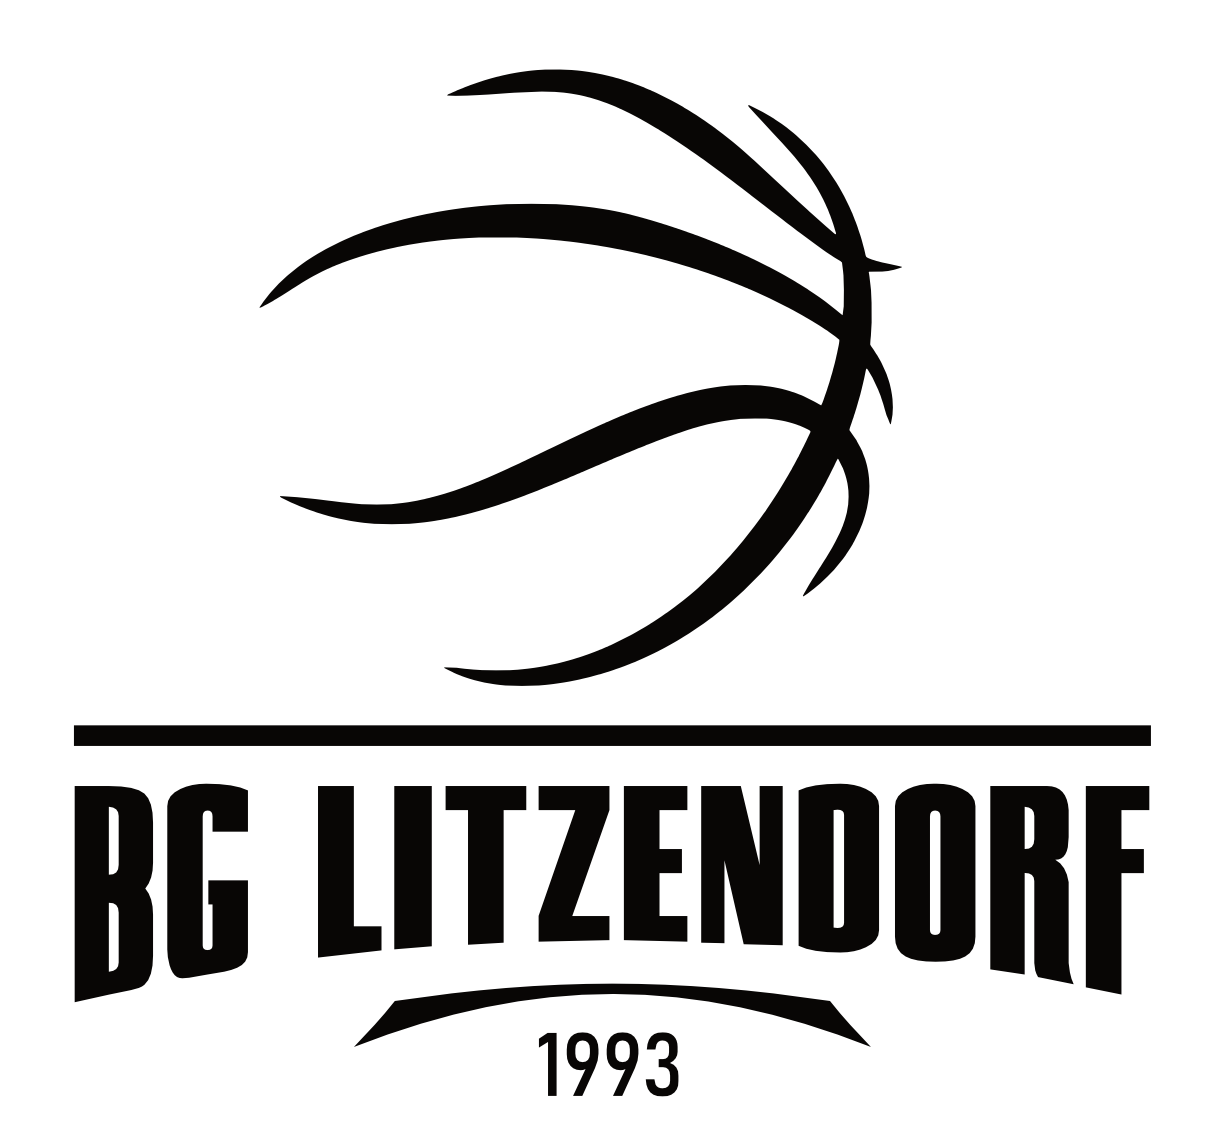 BG Litzendorf